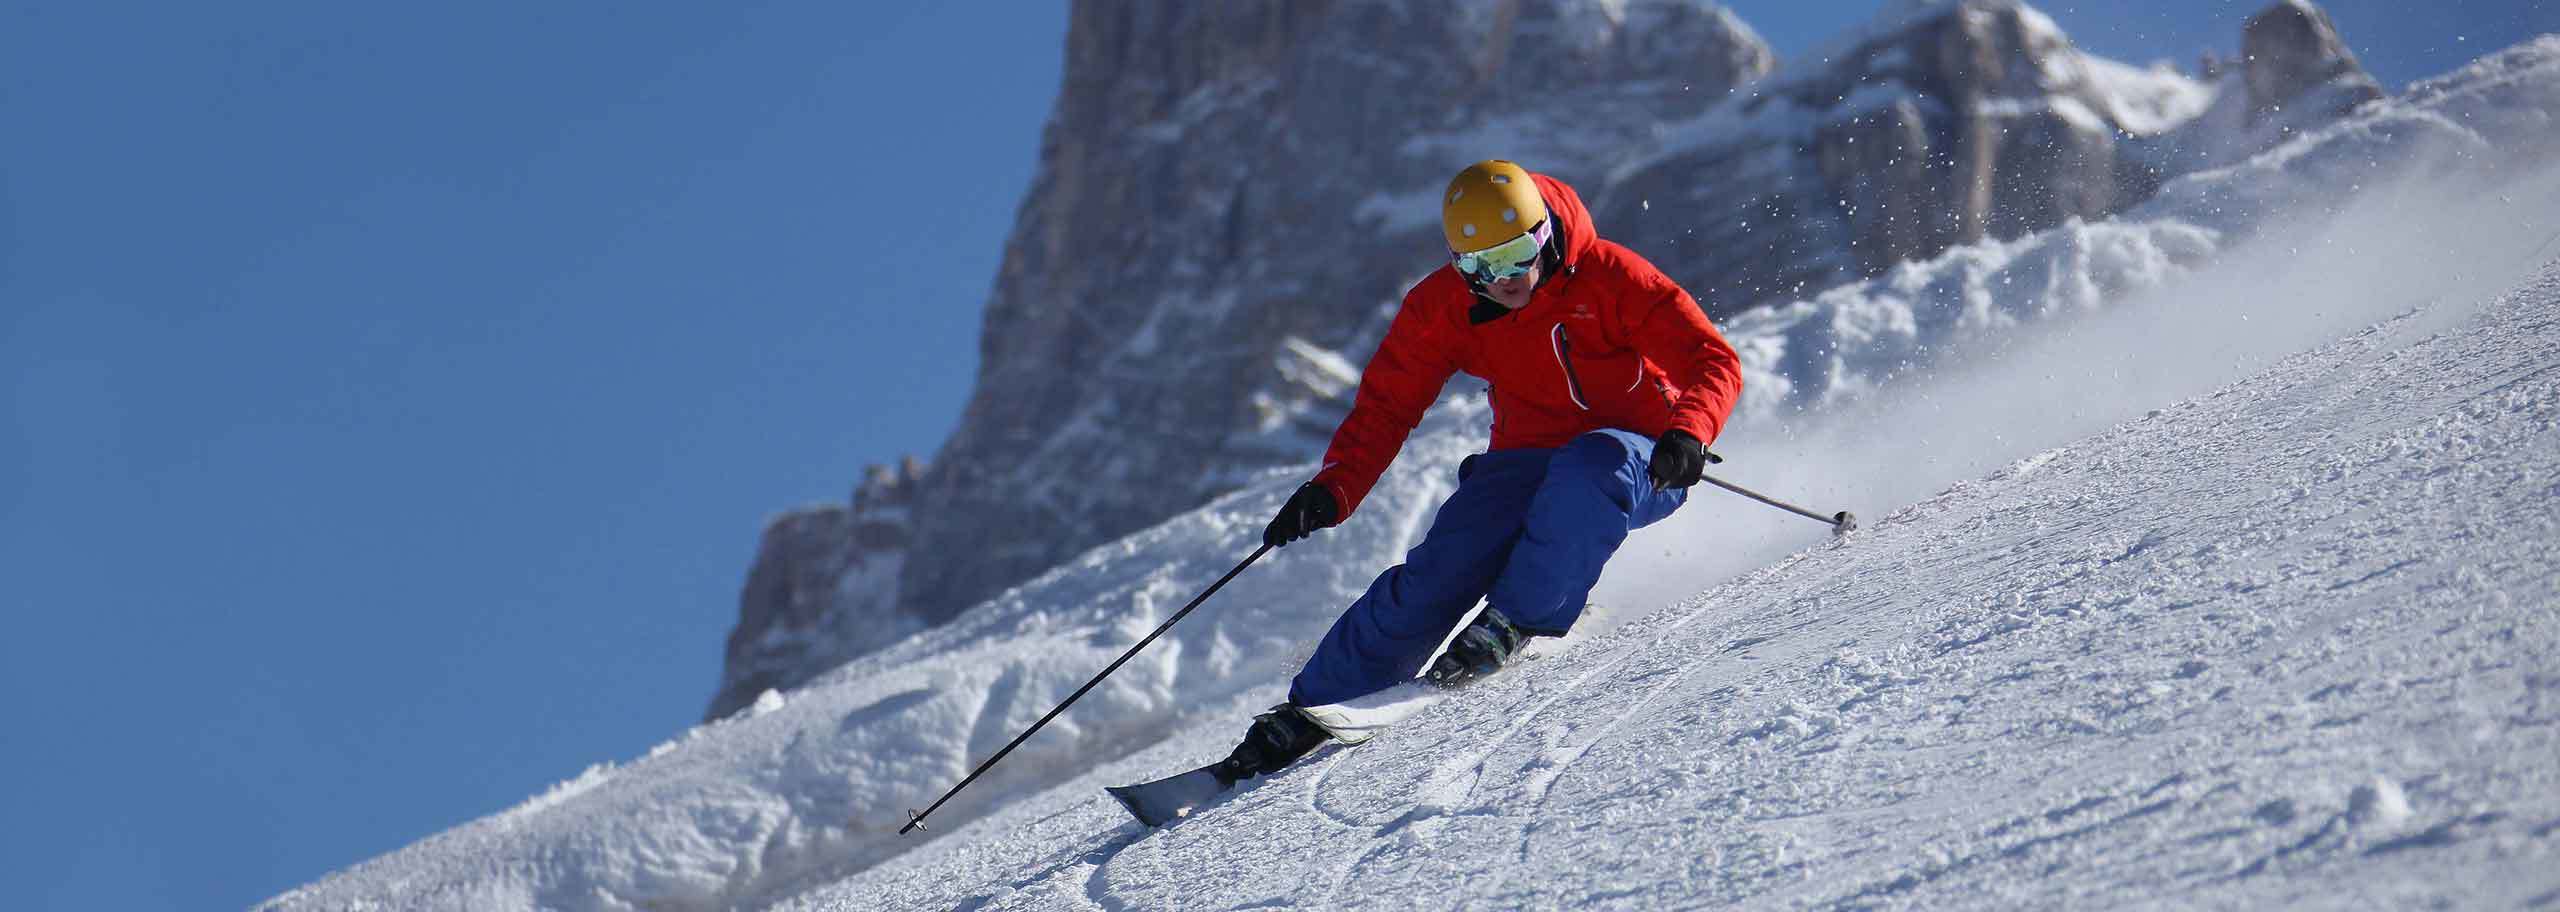 Ski Safari in Val di Zoldo, On-piste Skiing with a Mountain Guide